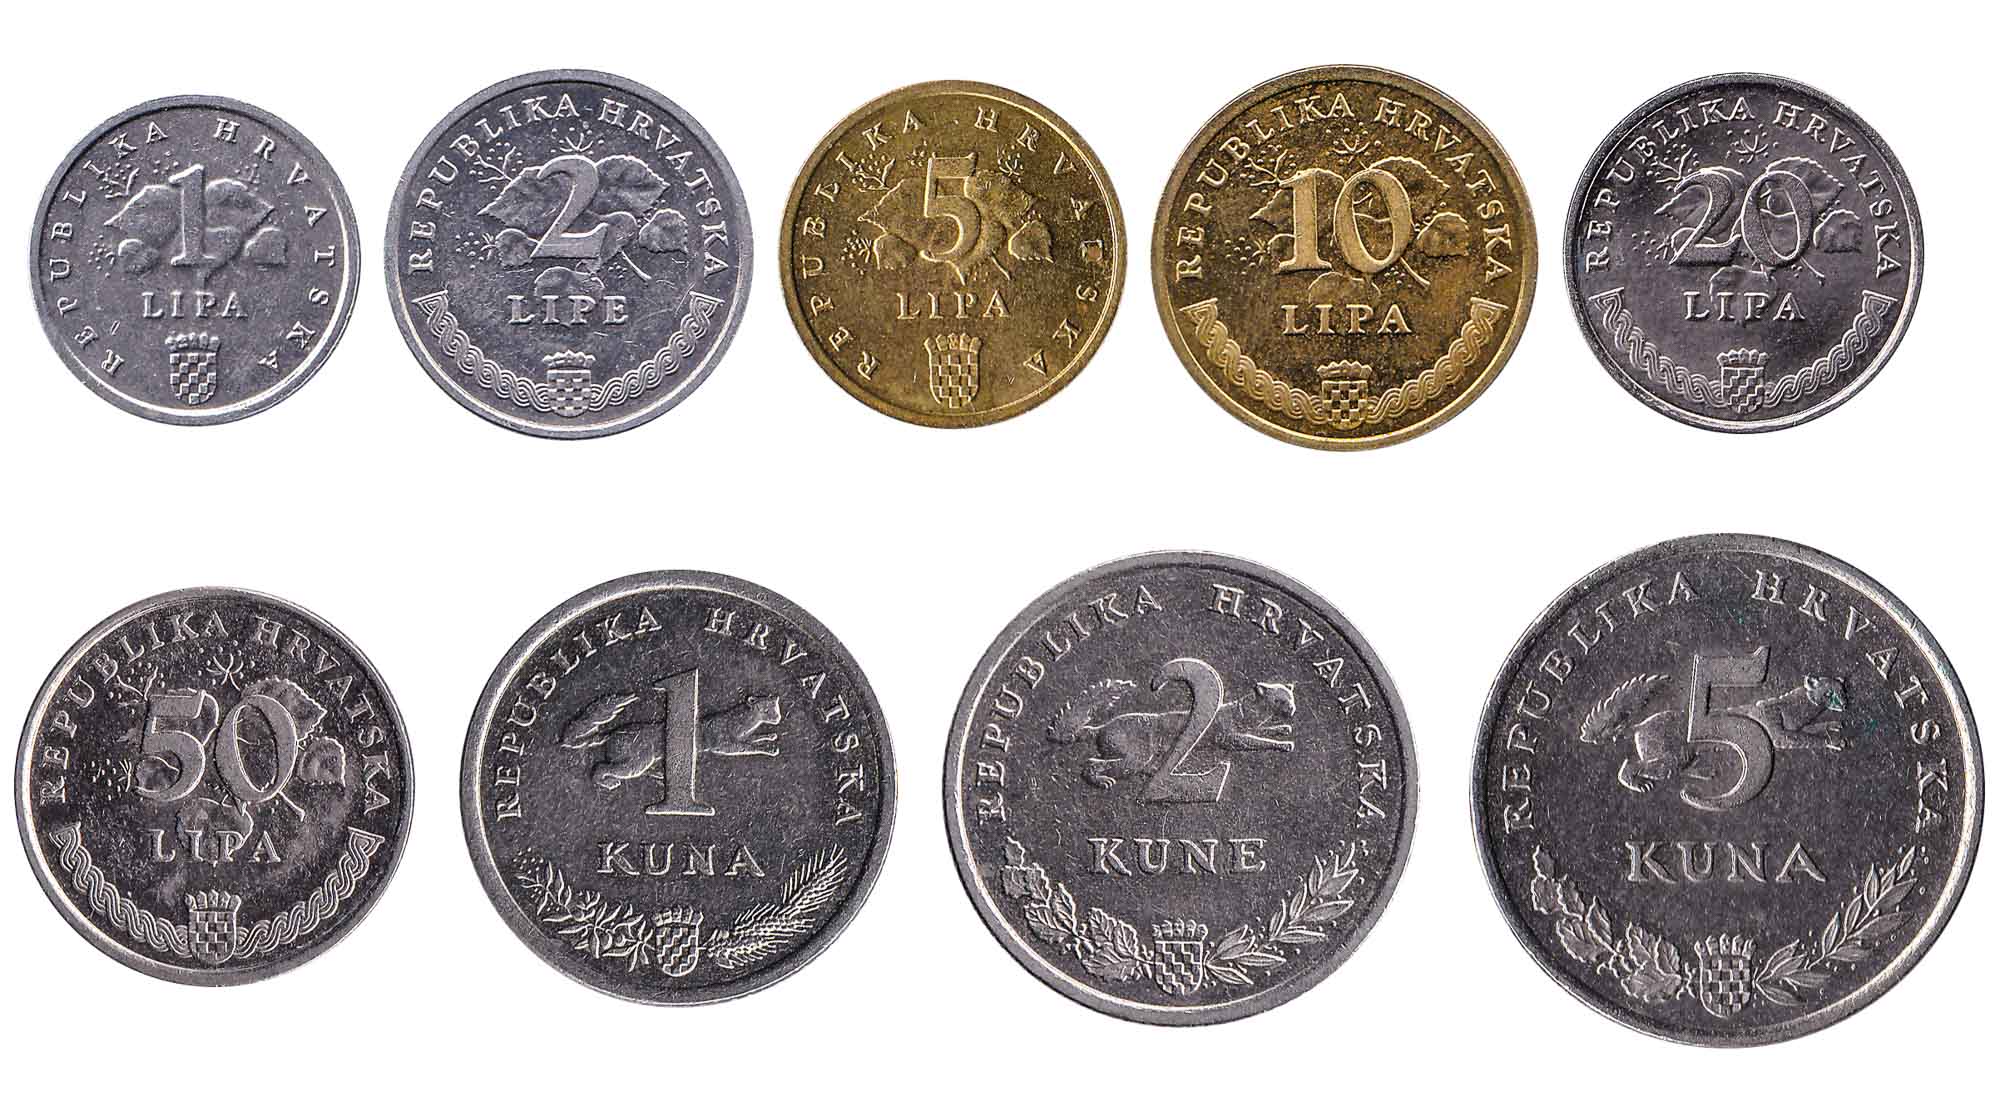 Croatian coins range from 1 lipa (0.01 HRK) to 5 kuna. 